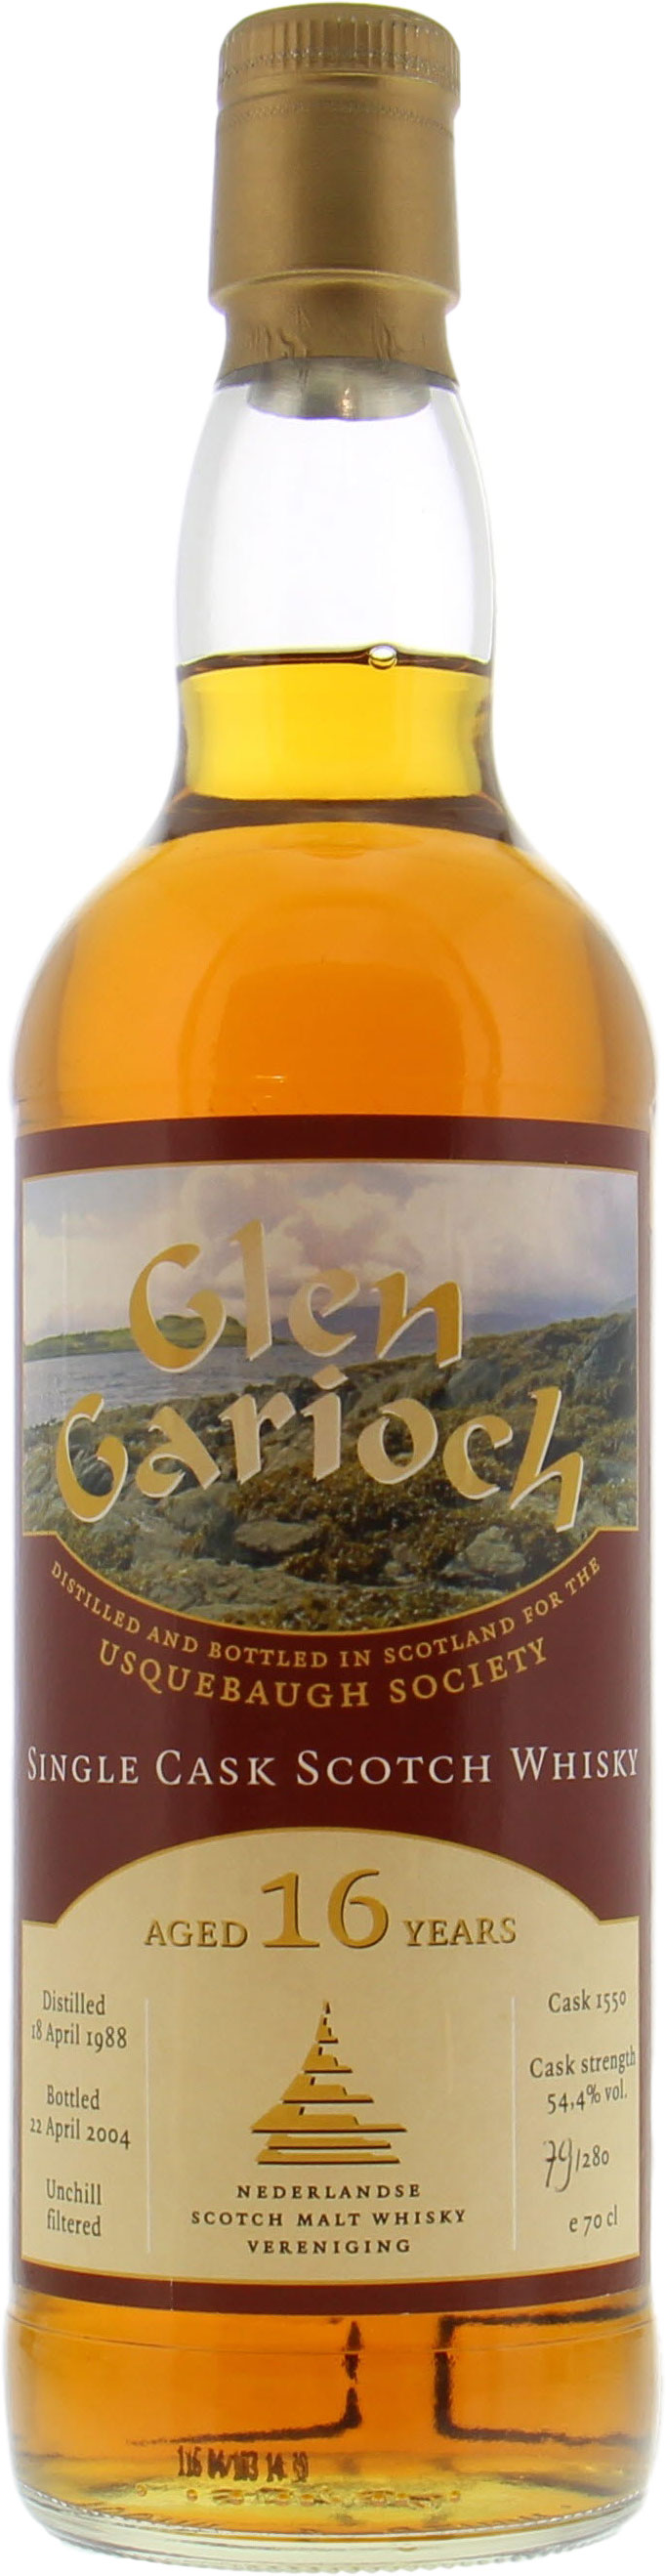 Glen Garioch - 16 Years Old Usquebaugh Society Cask 1550 54.4% 1990